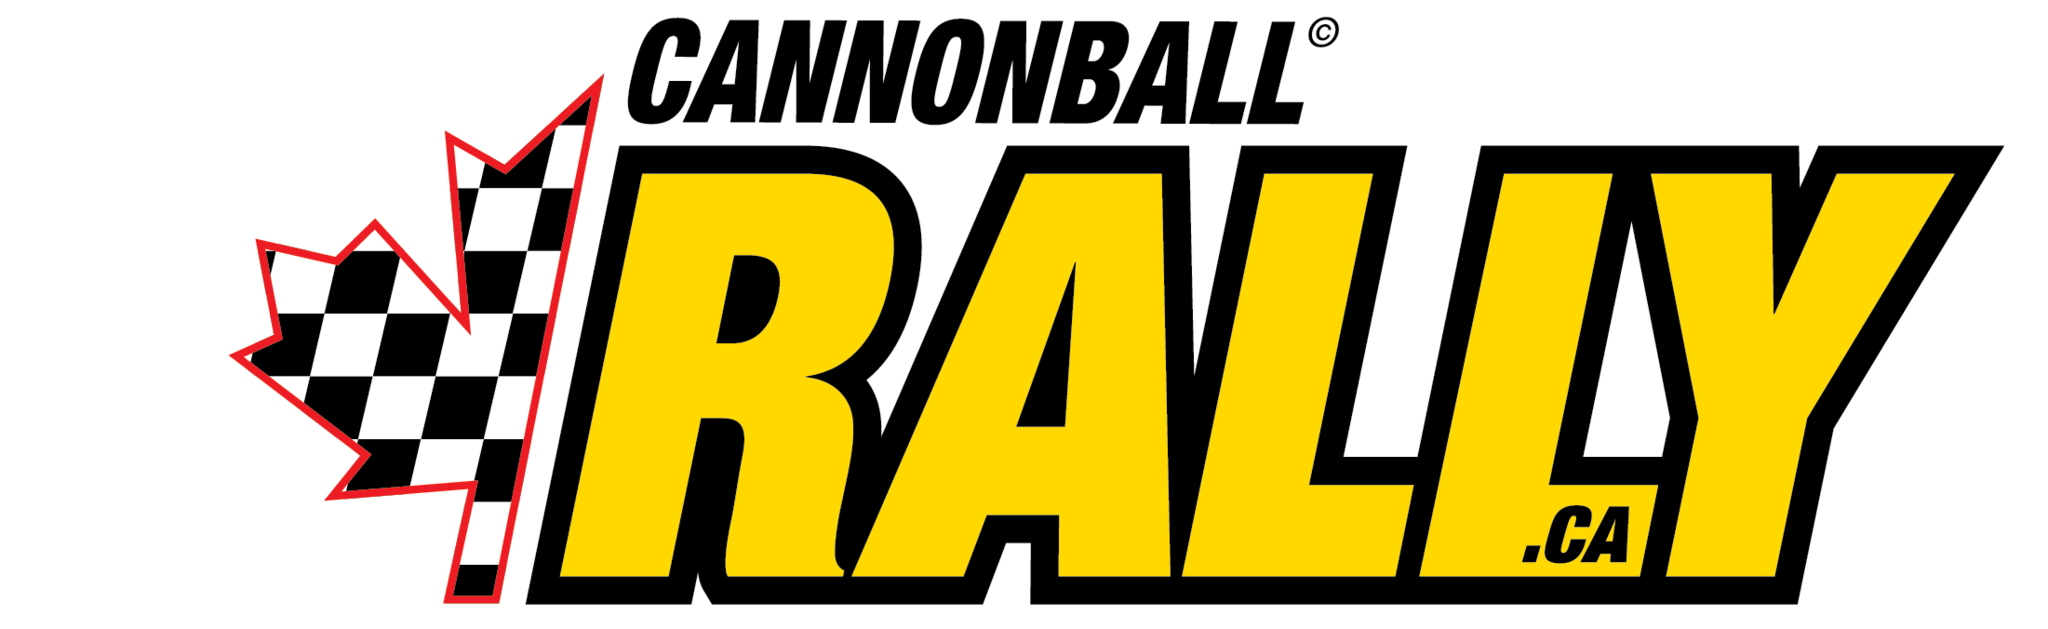 Cannonball Rally 2017 Logo